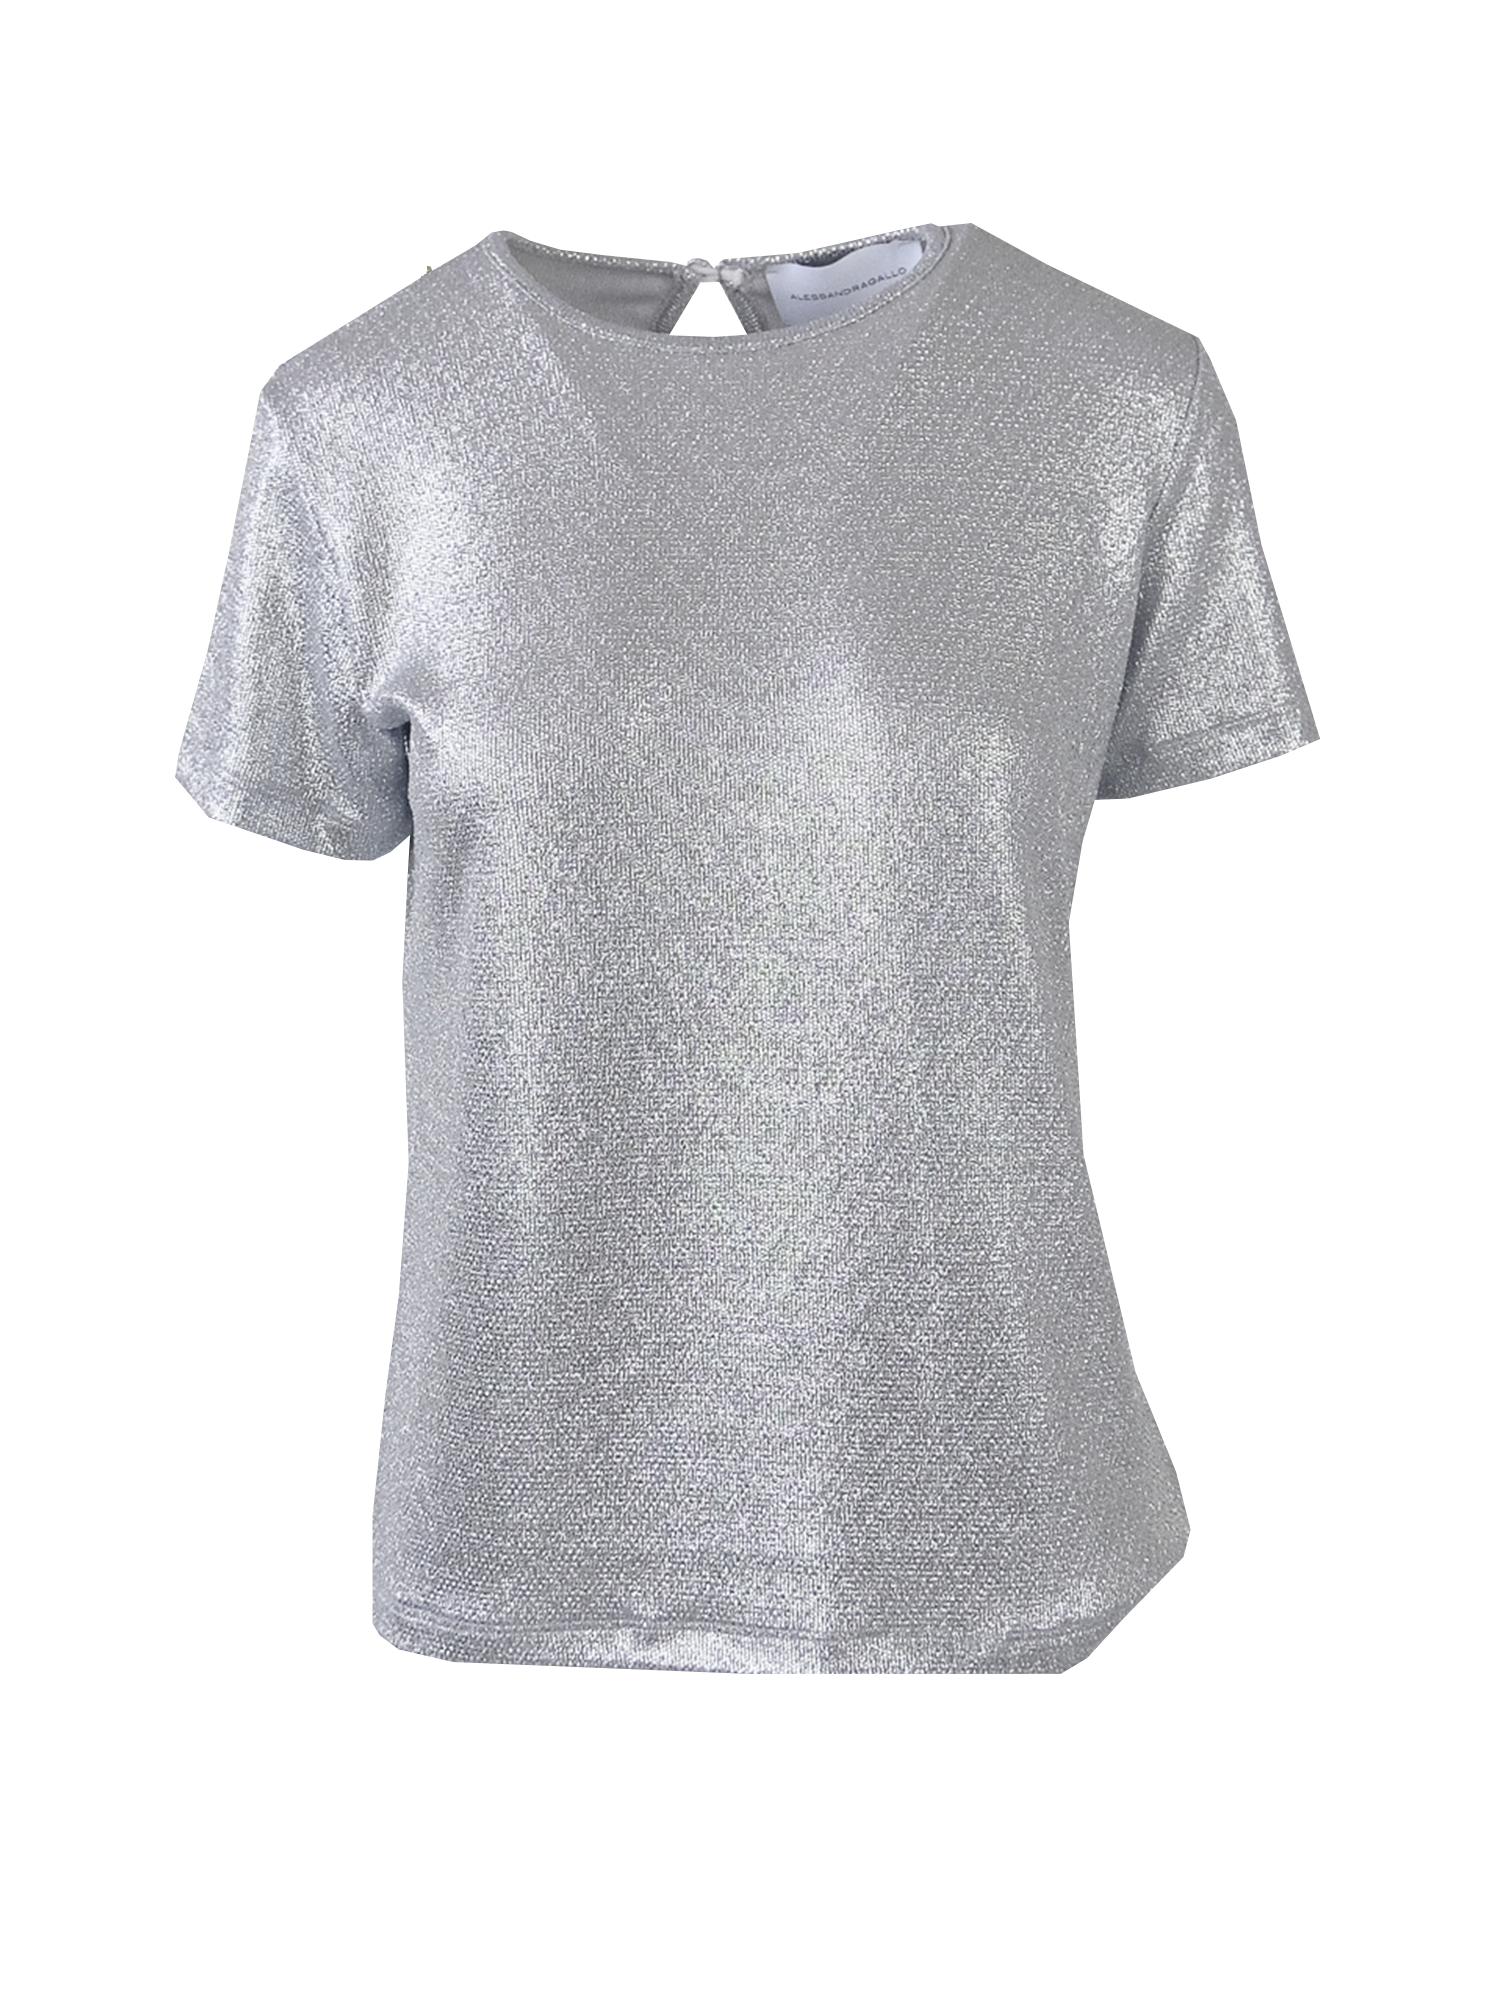 CARMEN - silver lurex t-shirt